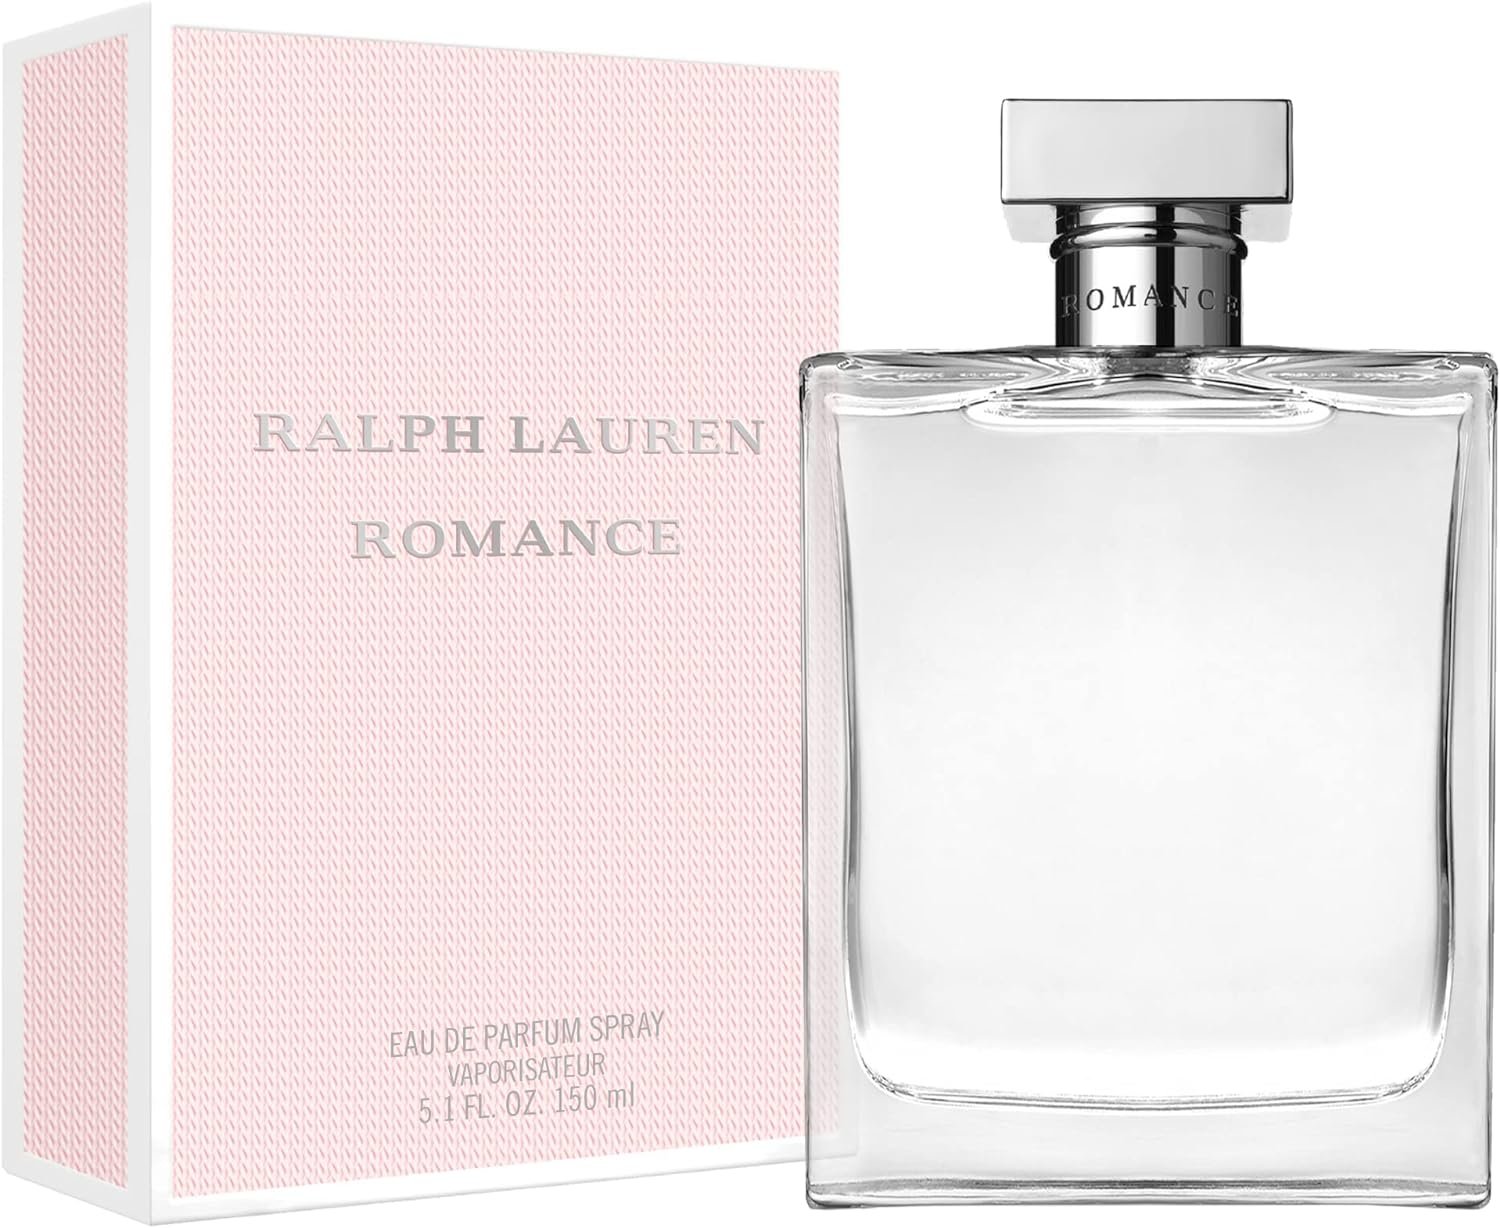 Romance - Eau de Parfum - Womens Perfume - Floral  Woody - With Rose, Jasmine, and Berries - Medium Intensity